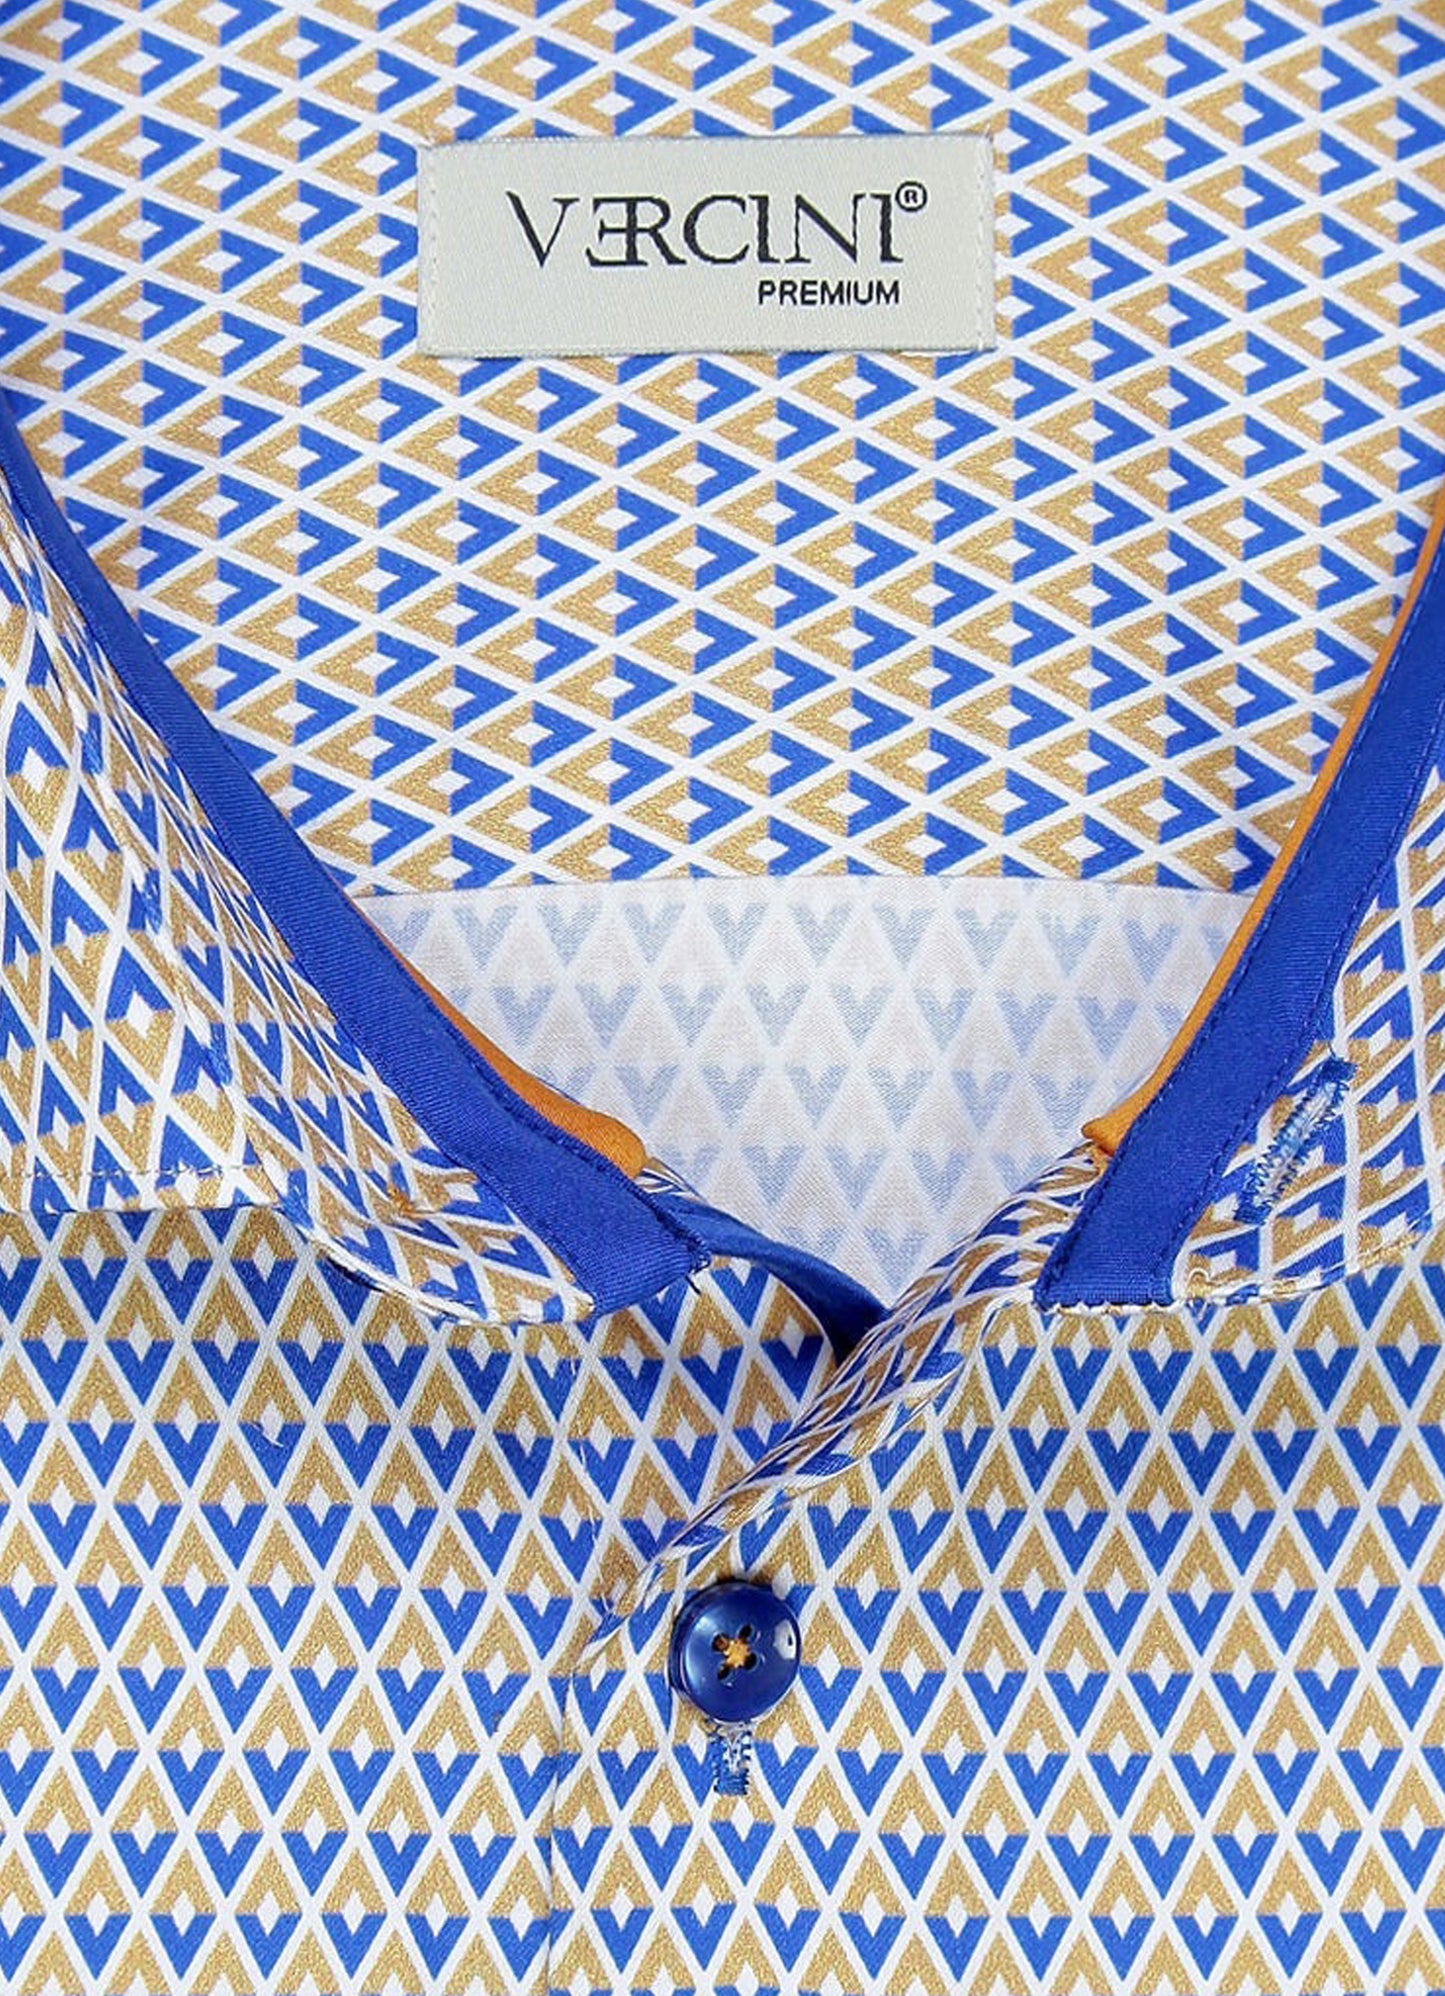 Azure Geometric Elegance Dress Shirt